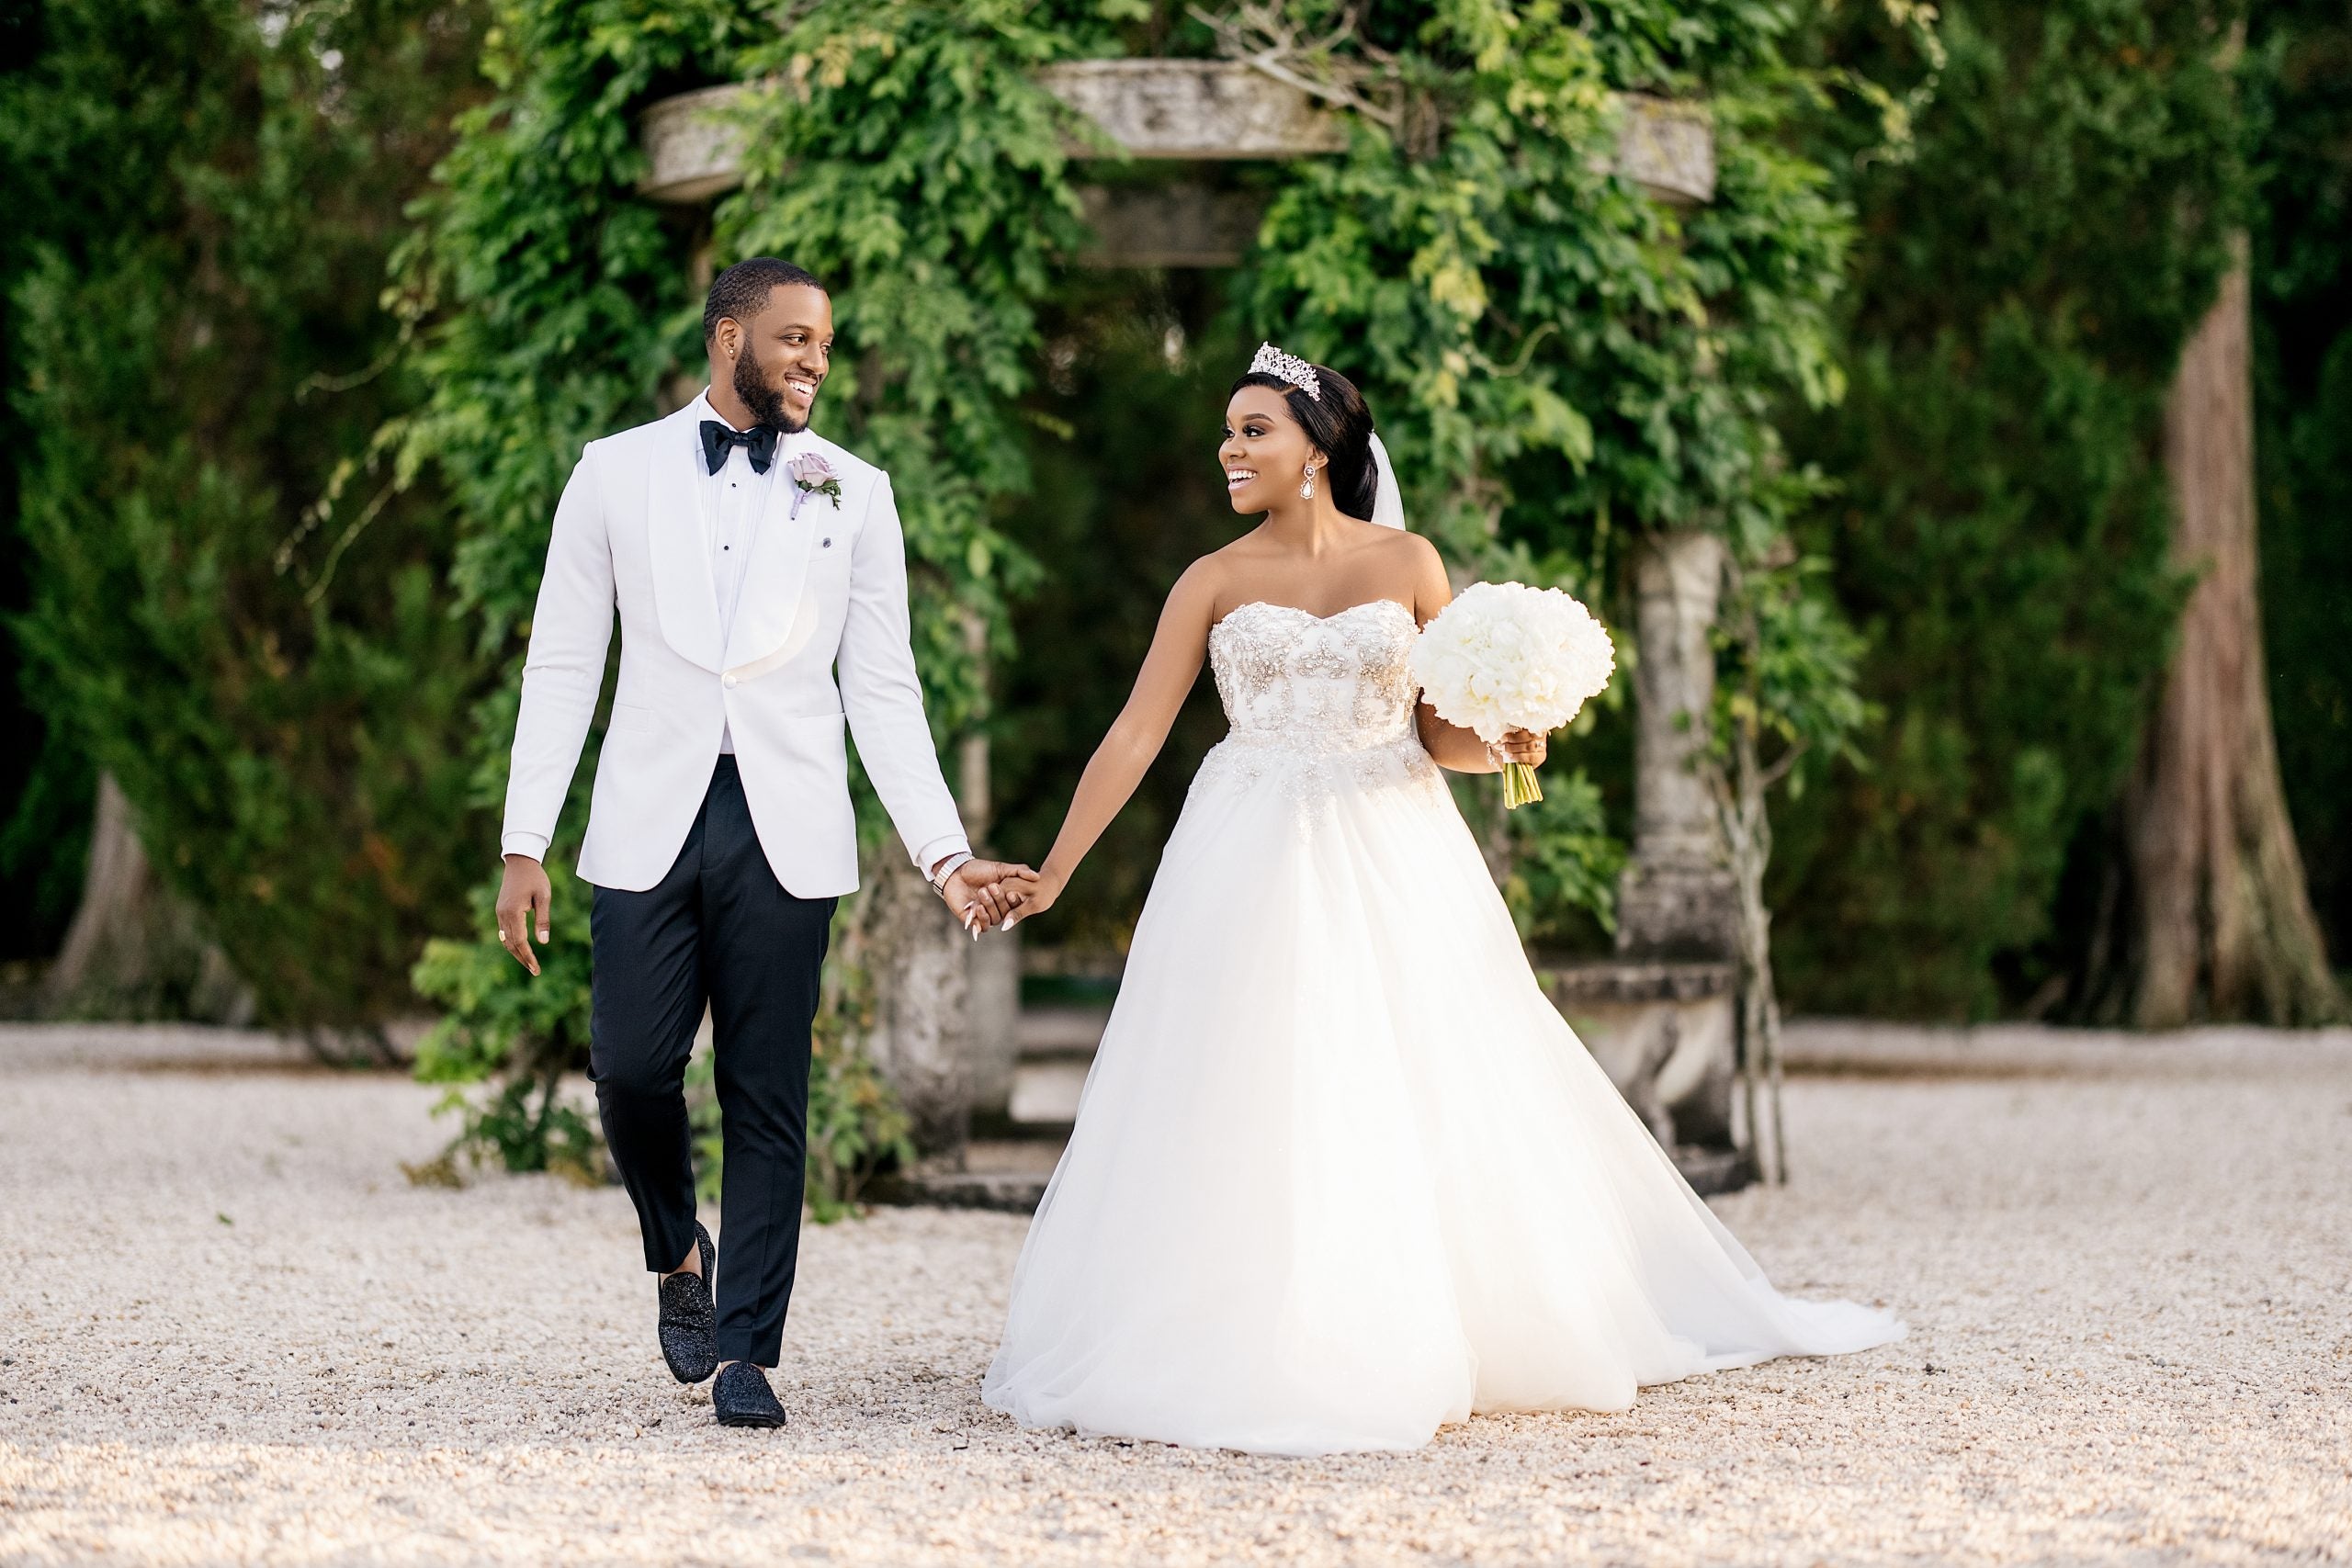 Bridal Bliss: After A Health Crisis, Jordan And Naomi Celebrated Life And Love Like Black Royalty